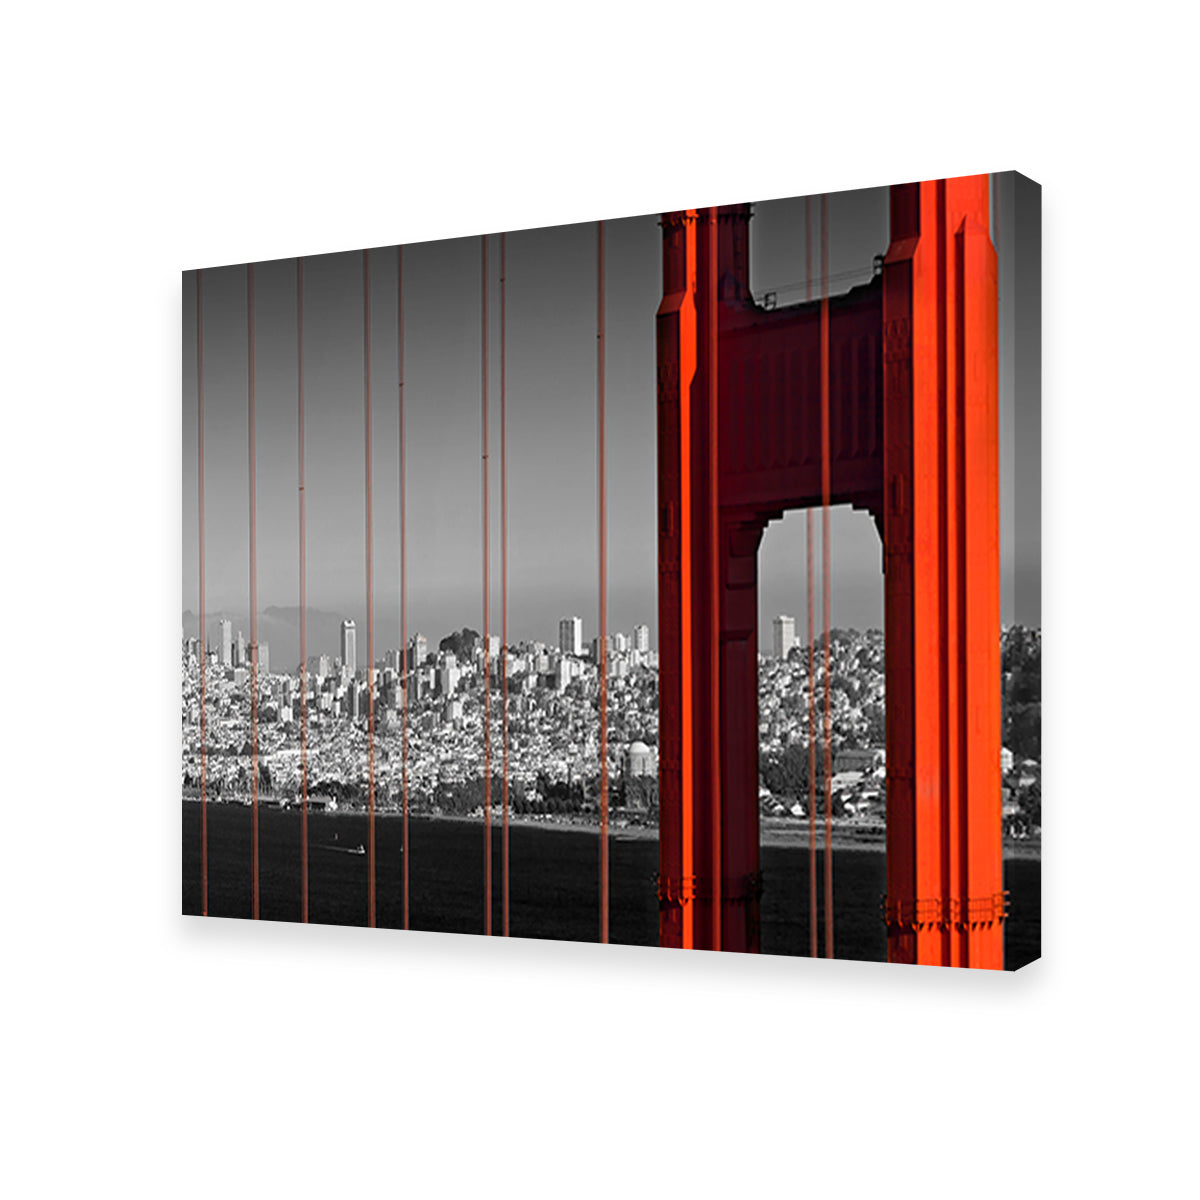 Golden Gate Bridge - Panoramic Downtown View